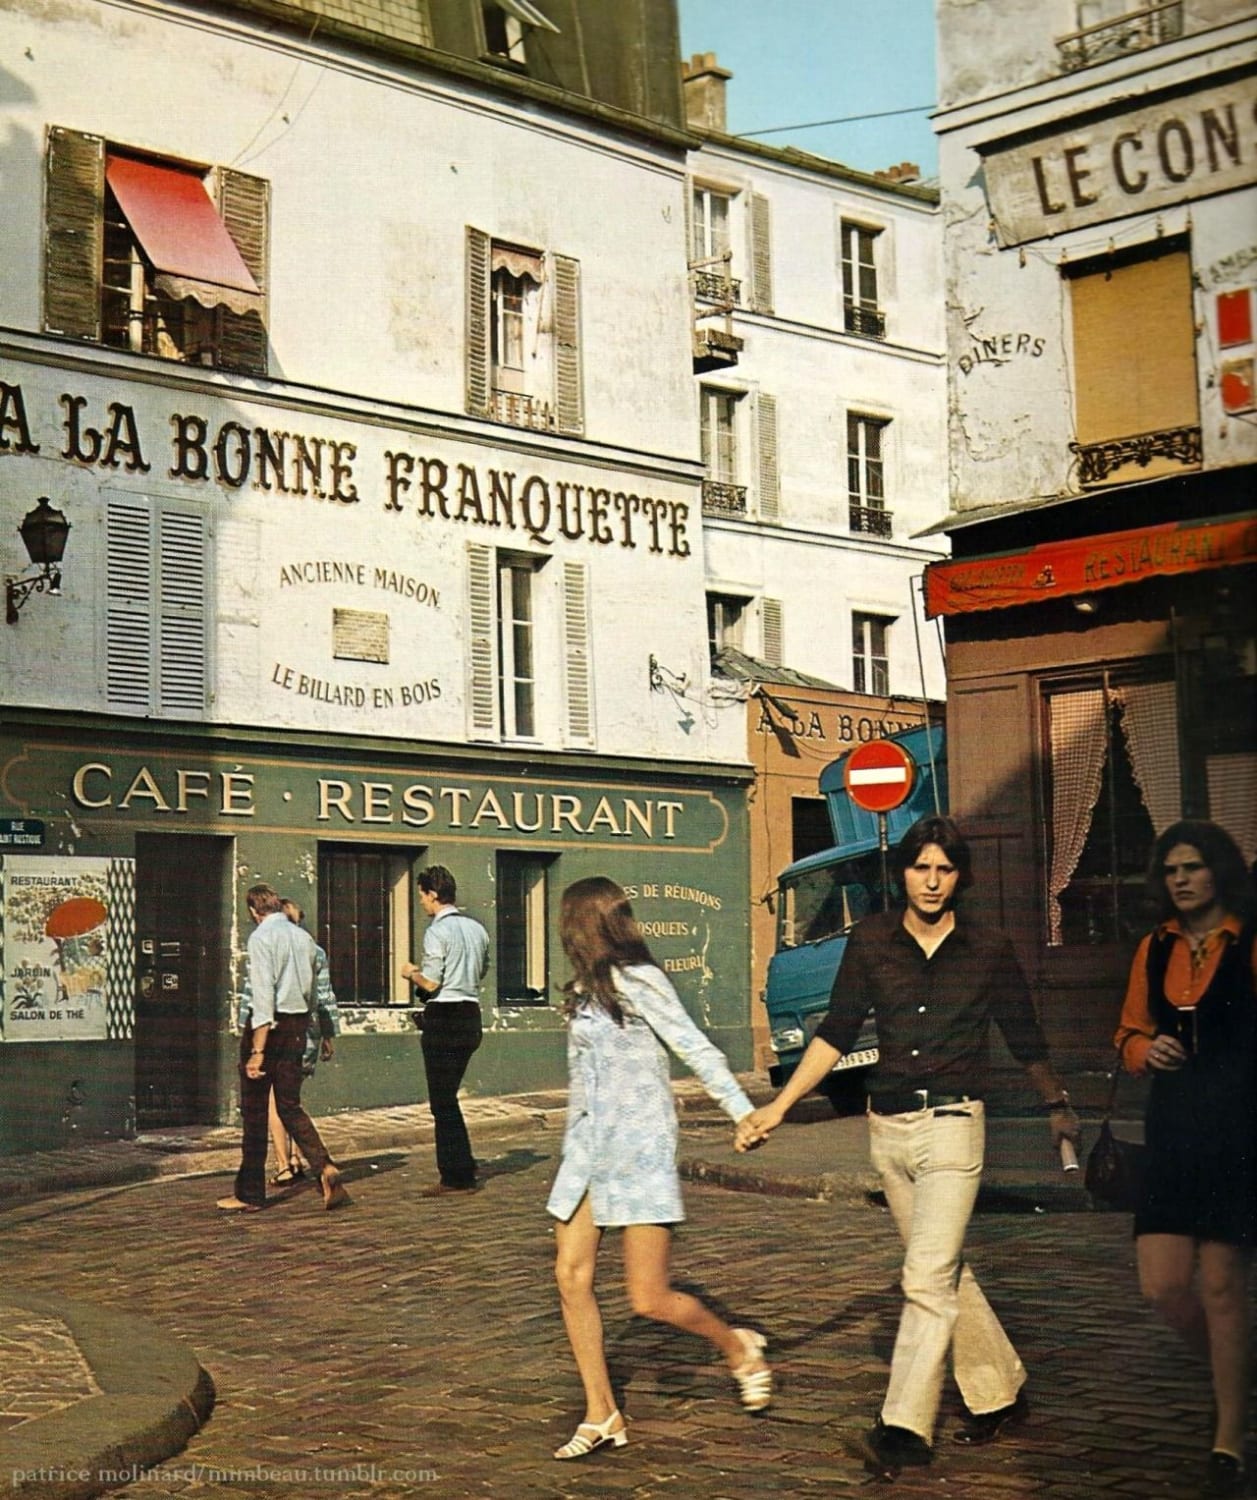 Montmartre Paris circa 1970 Patrice Molinard | Paris aesthetic, Vintage paris, Old paris